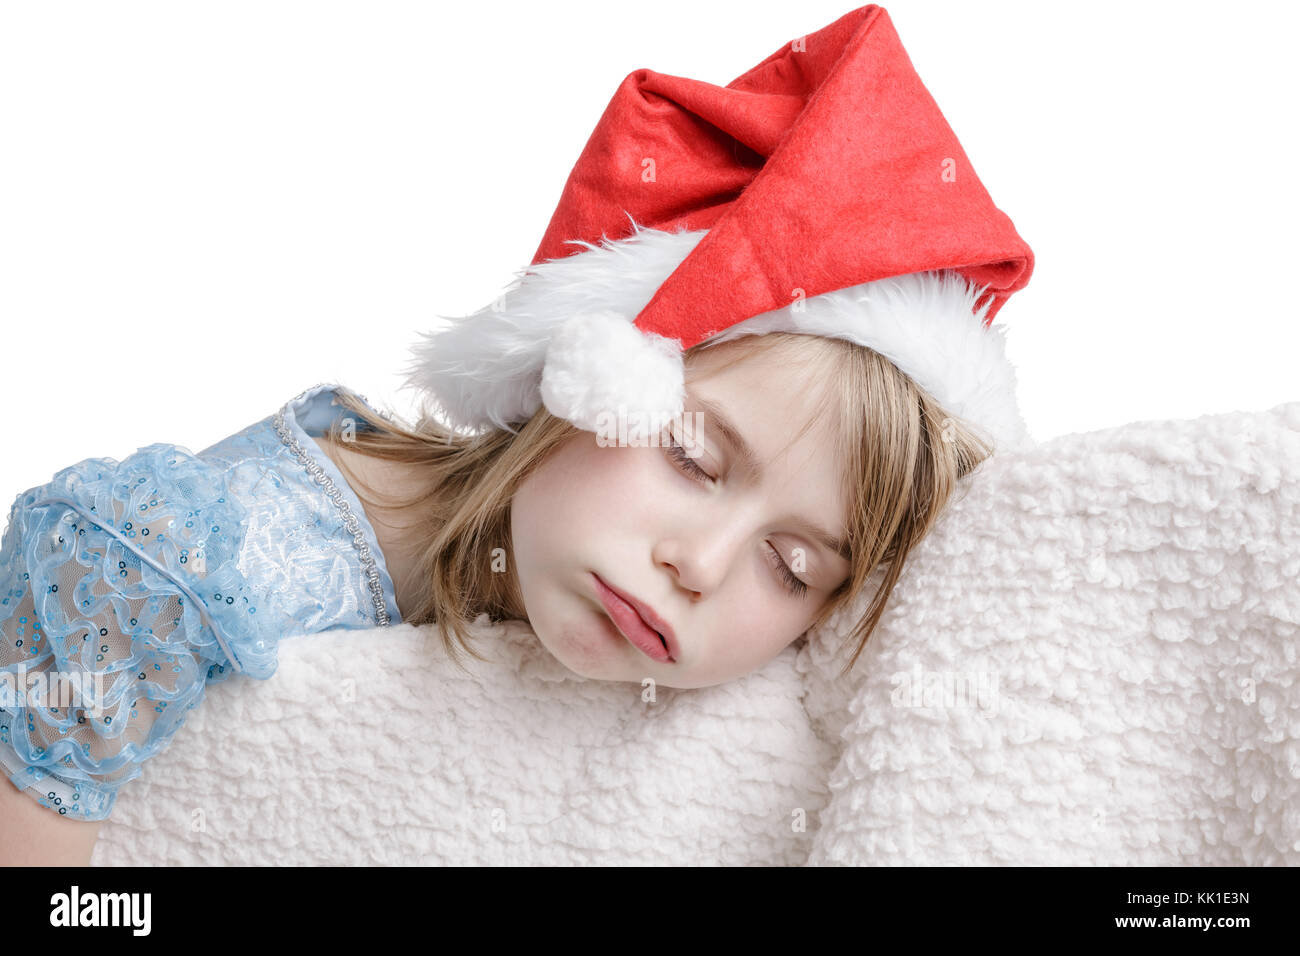 7 anni ragazza dorme nella sleeping beauty dress e santa hat. Foto Stock